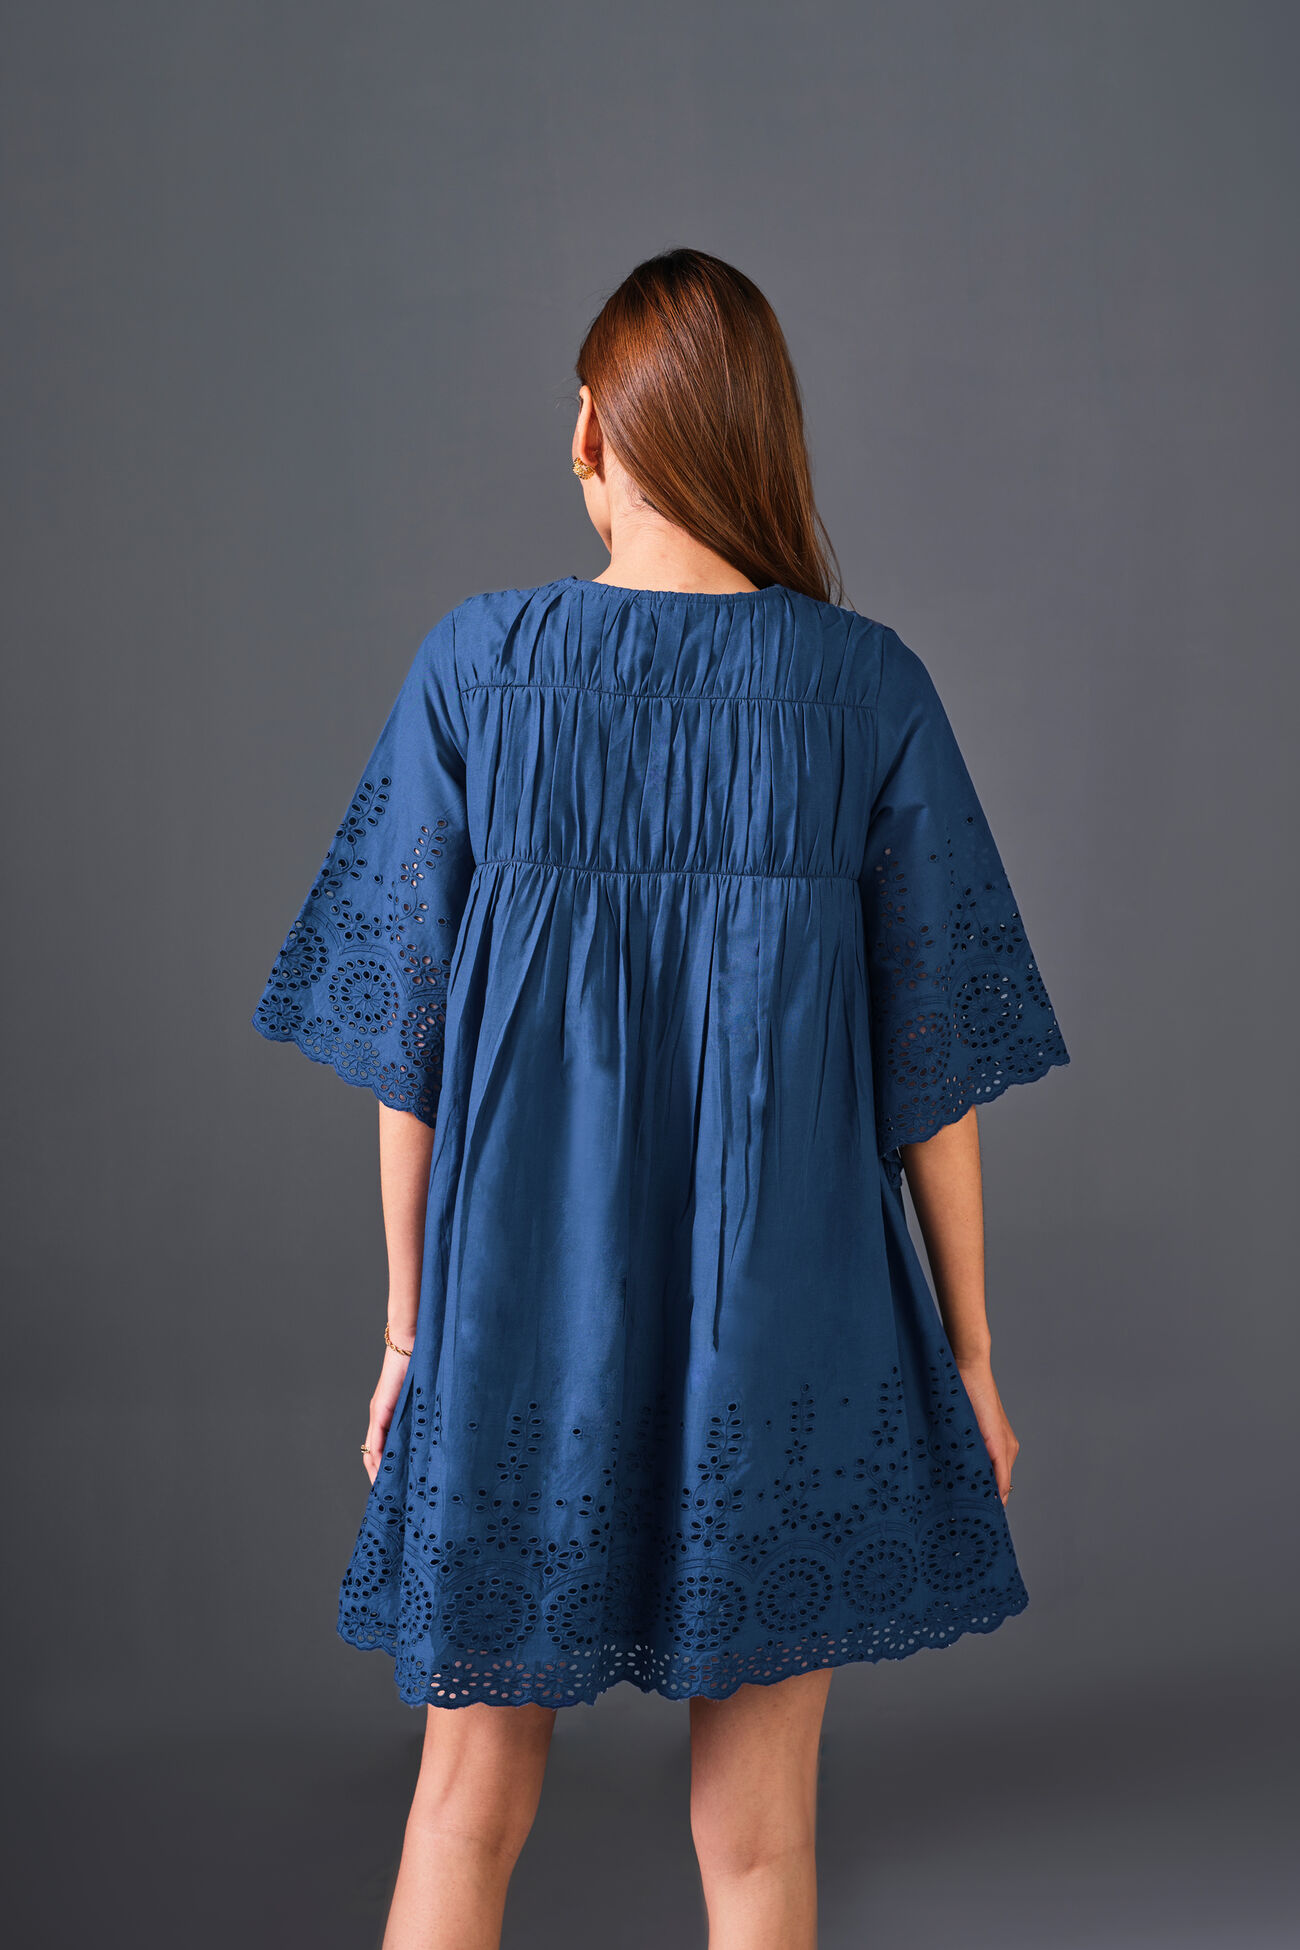 Breezy Fling Cotton Dress, Navy Blue, image 9